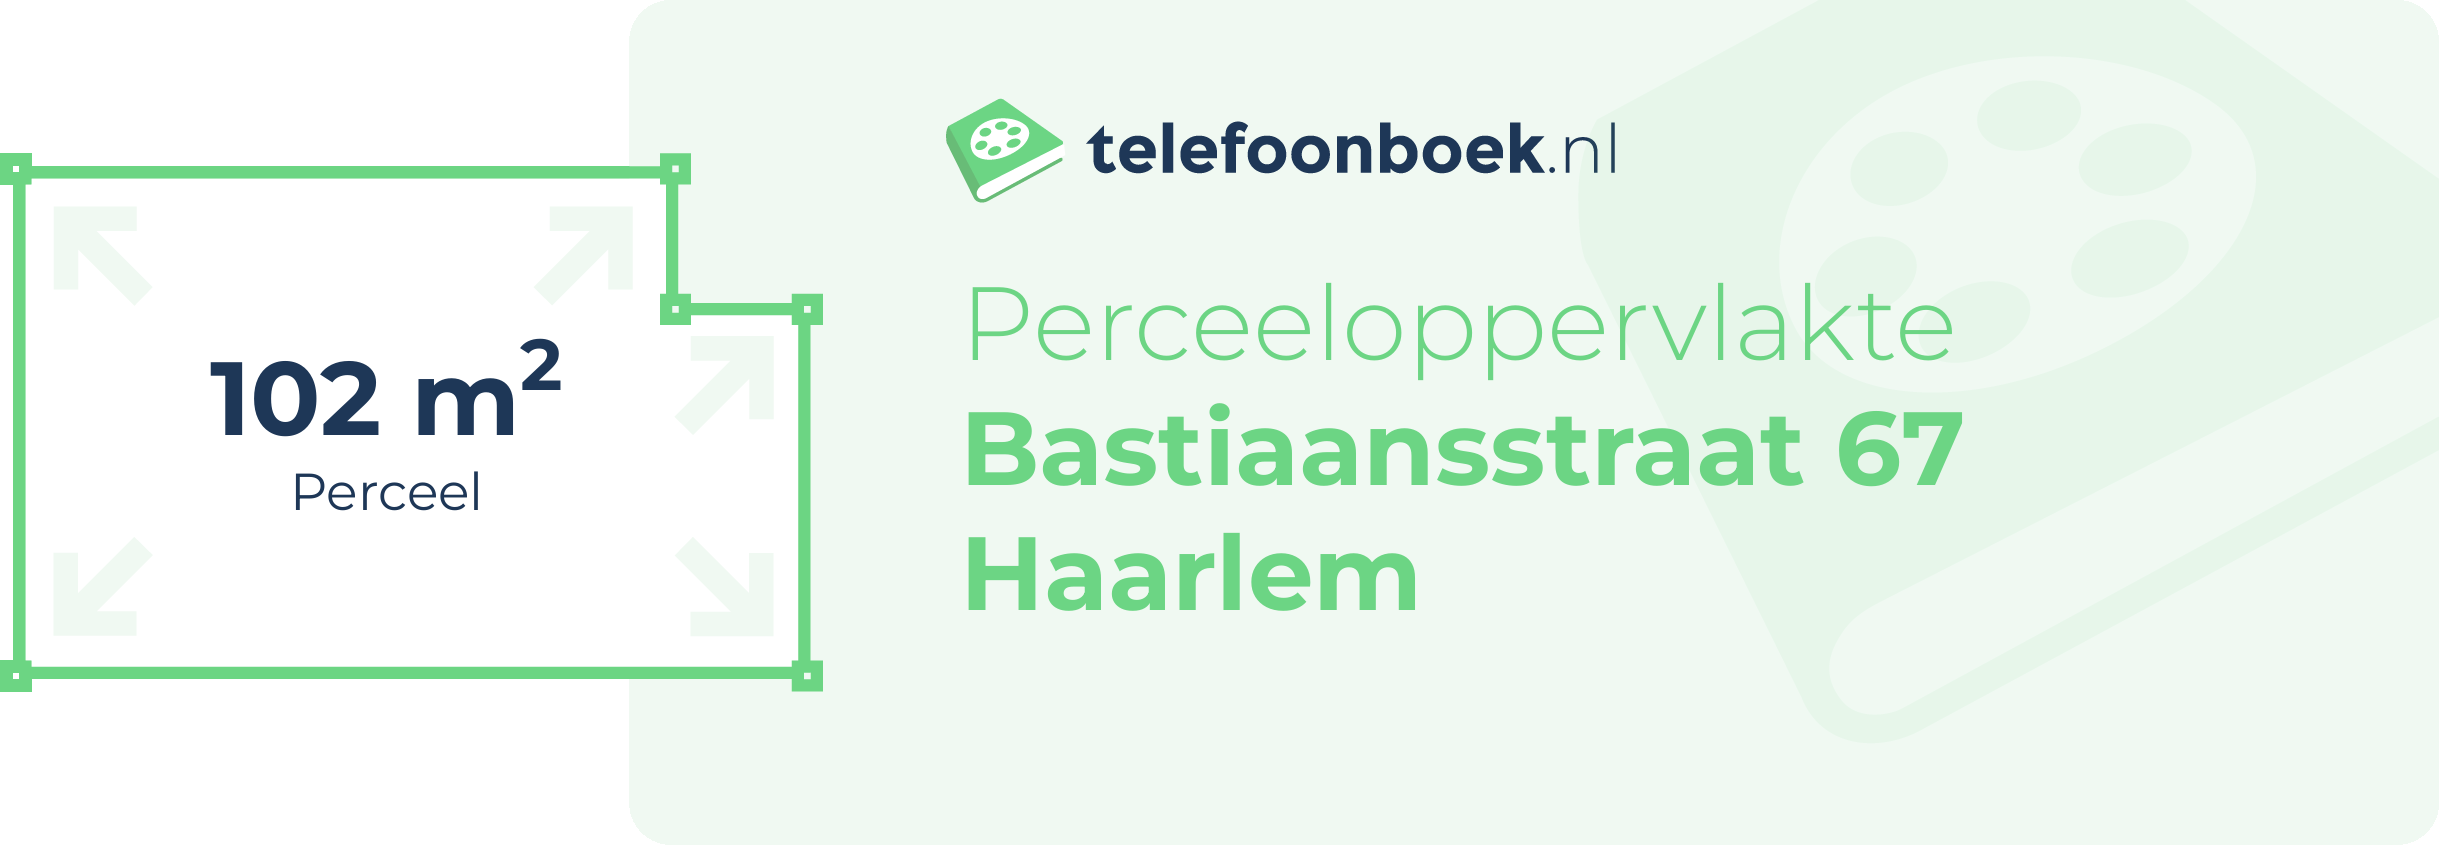 Perceeloppervlakte Bastiaansstraat 67 Haarlem